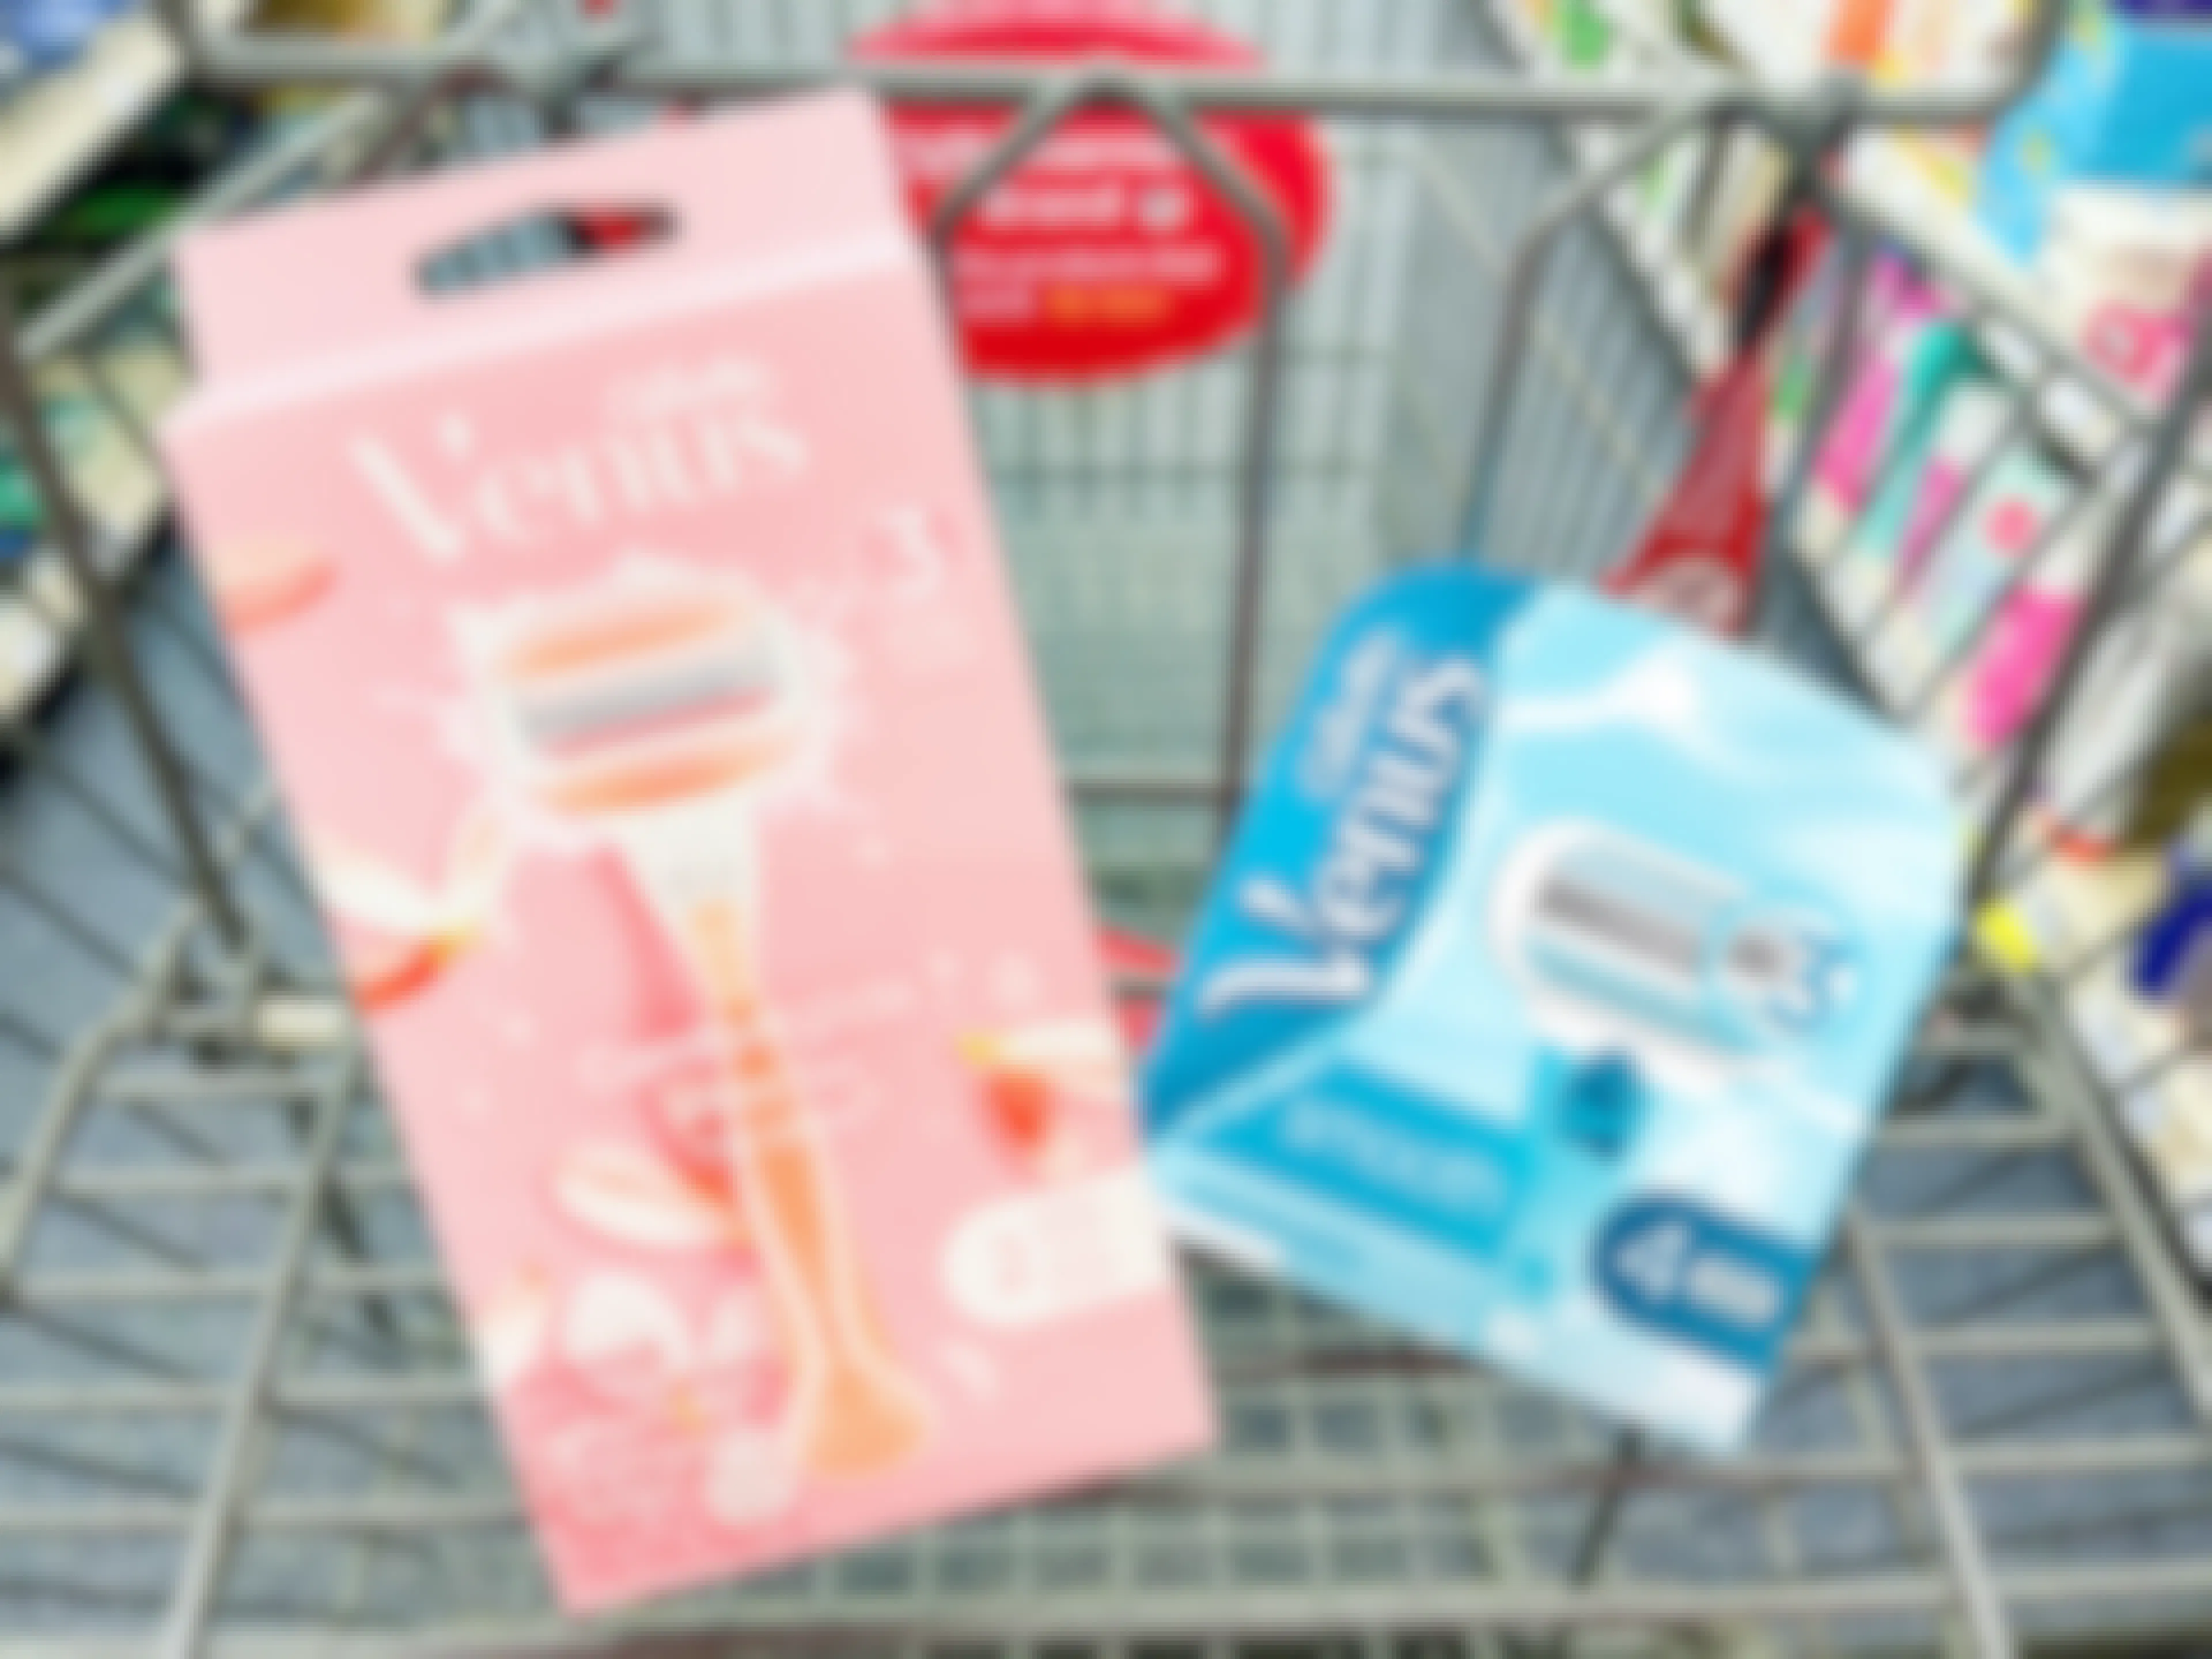 shopping cart with Gillette Venus razor and razor cartridges